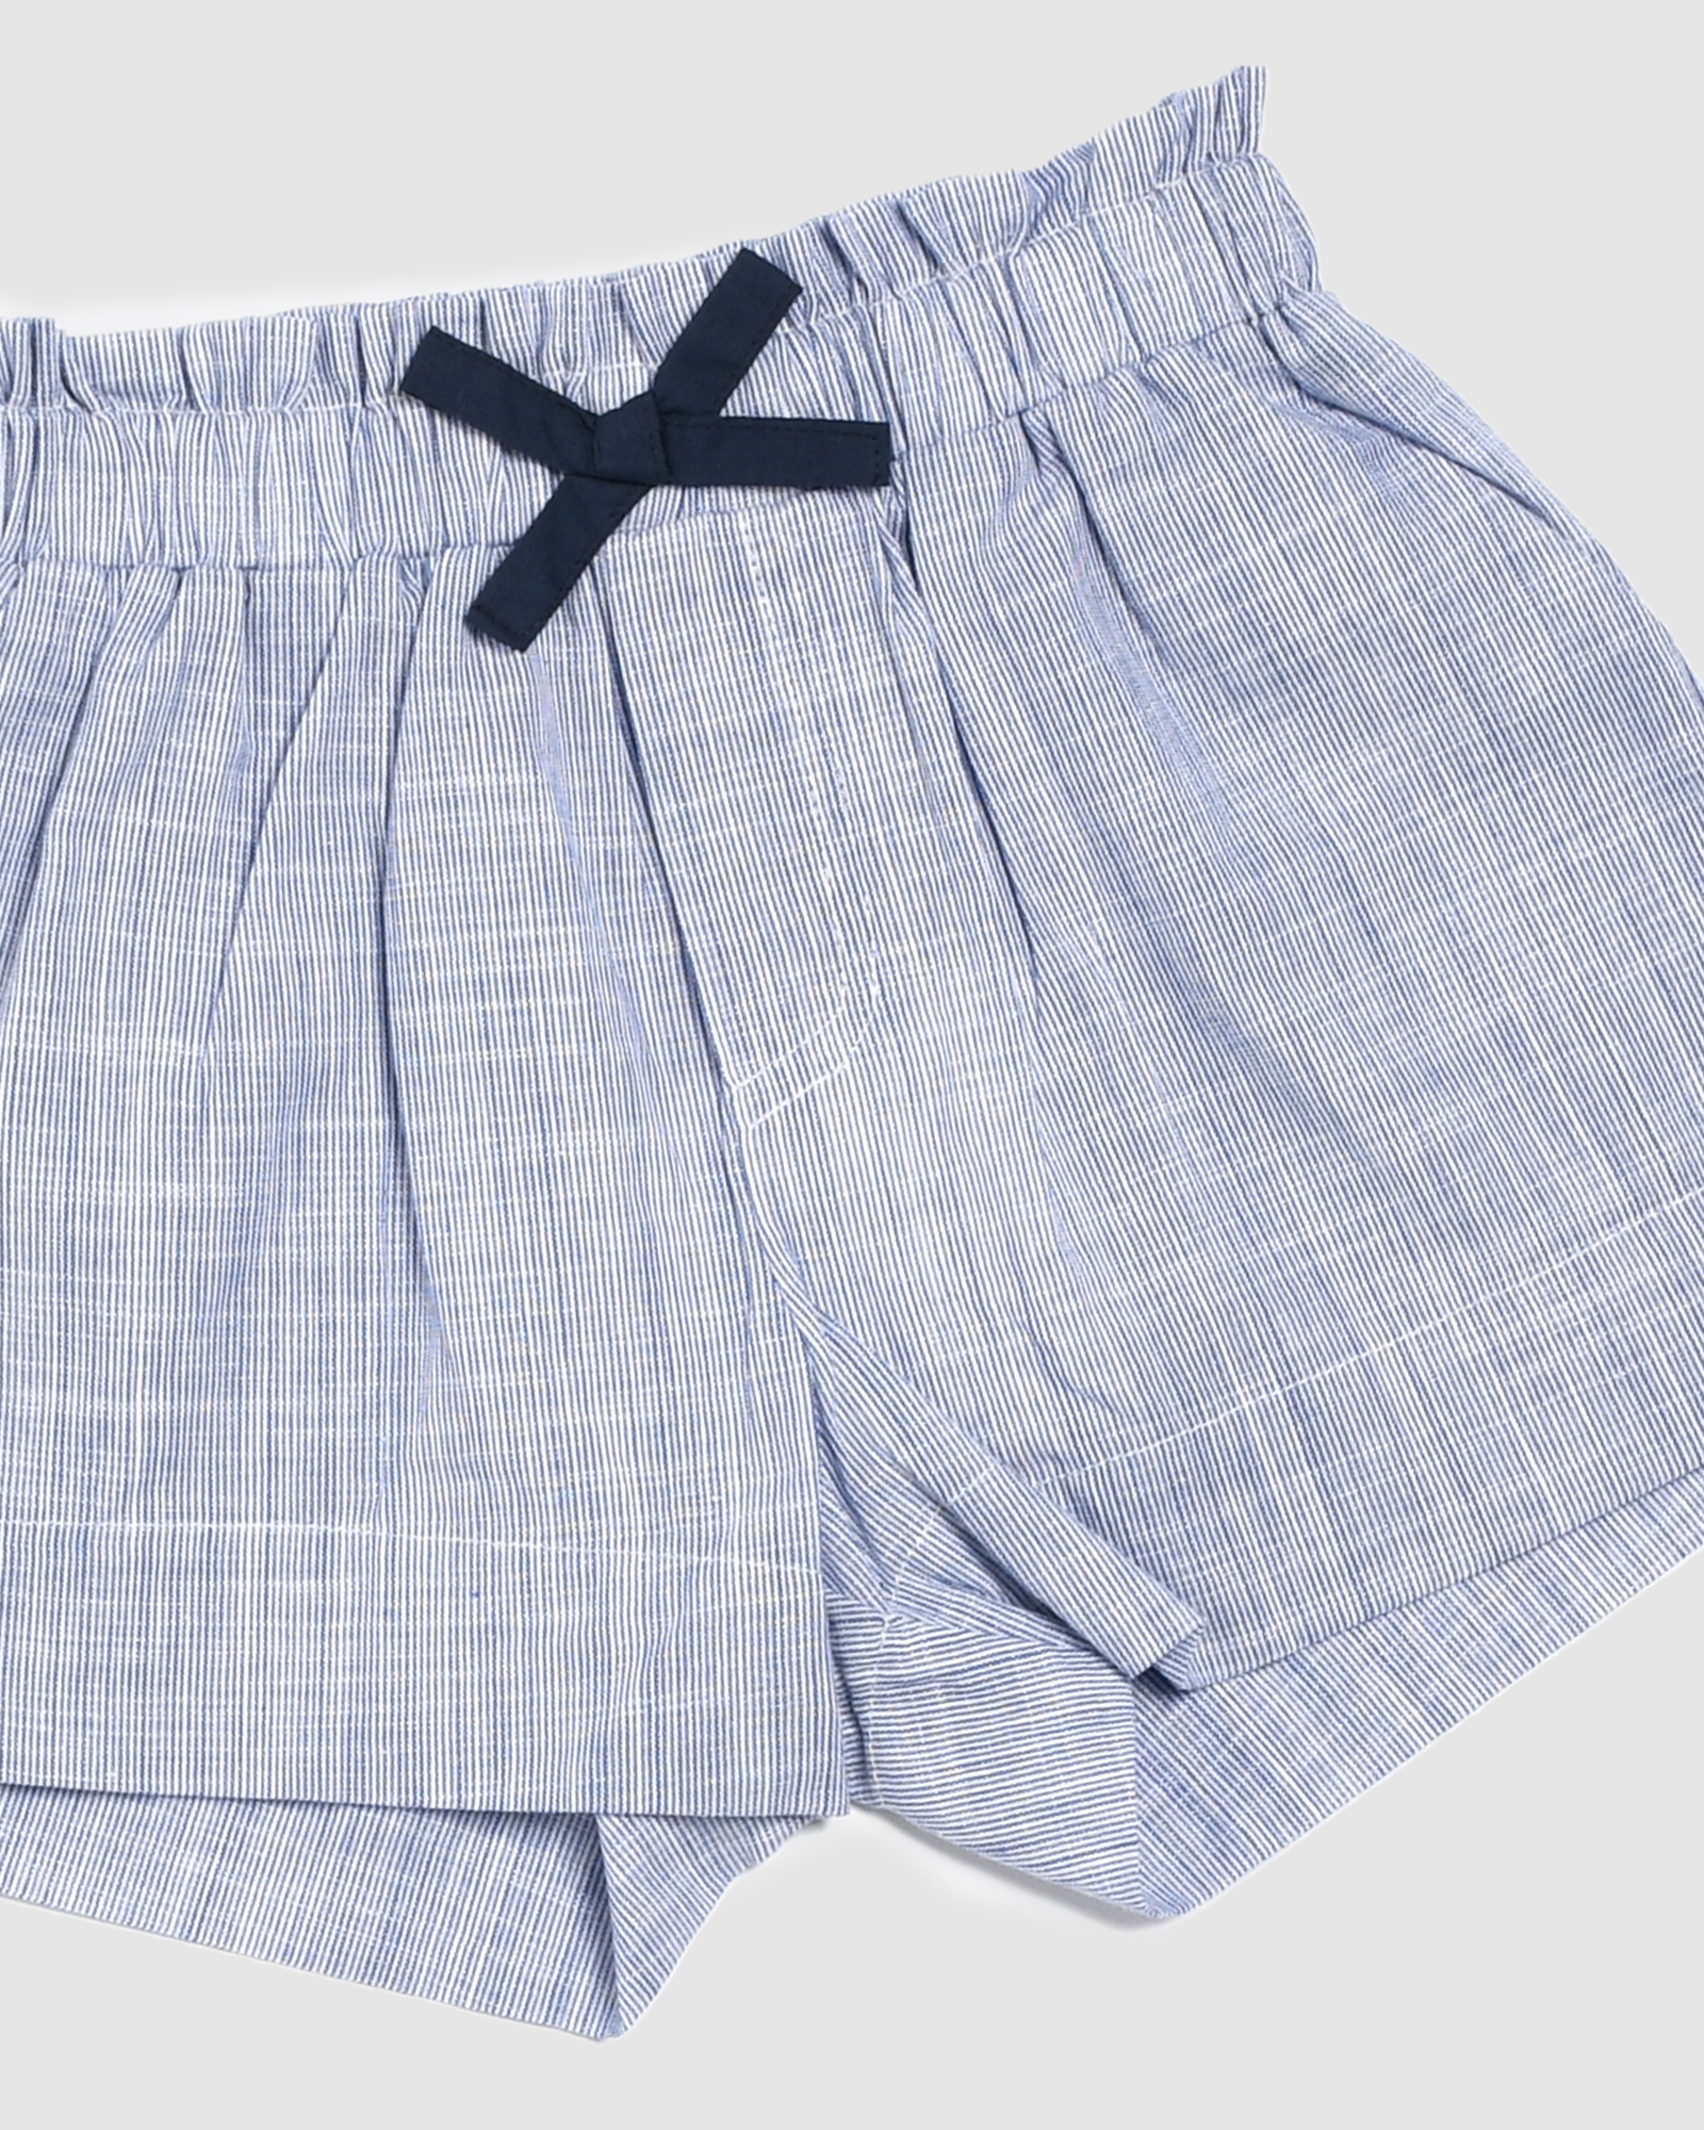 Mila Cotton Stripe Short in ANTIQUE BLUE